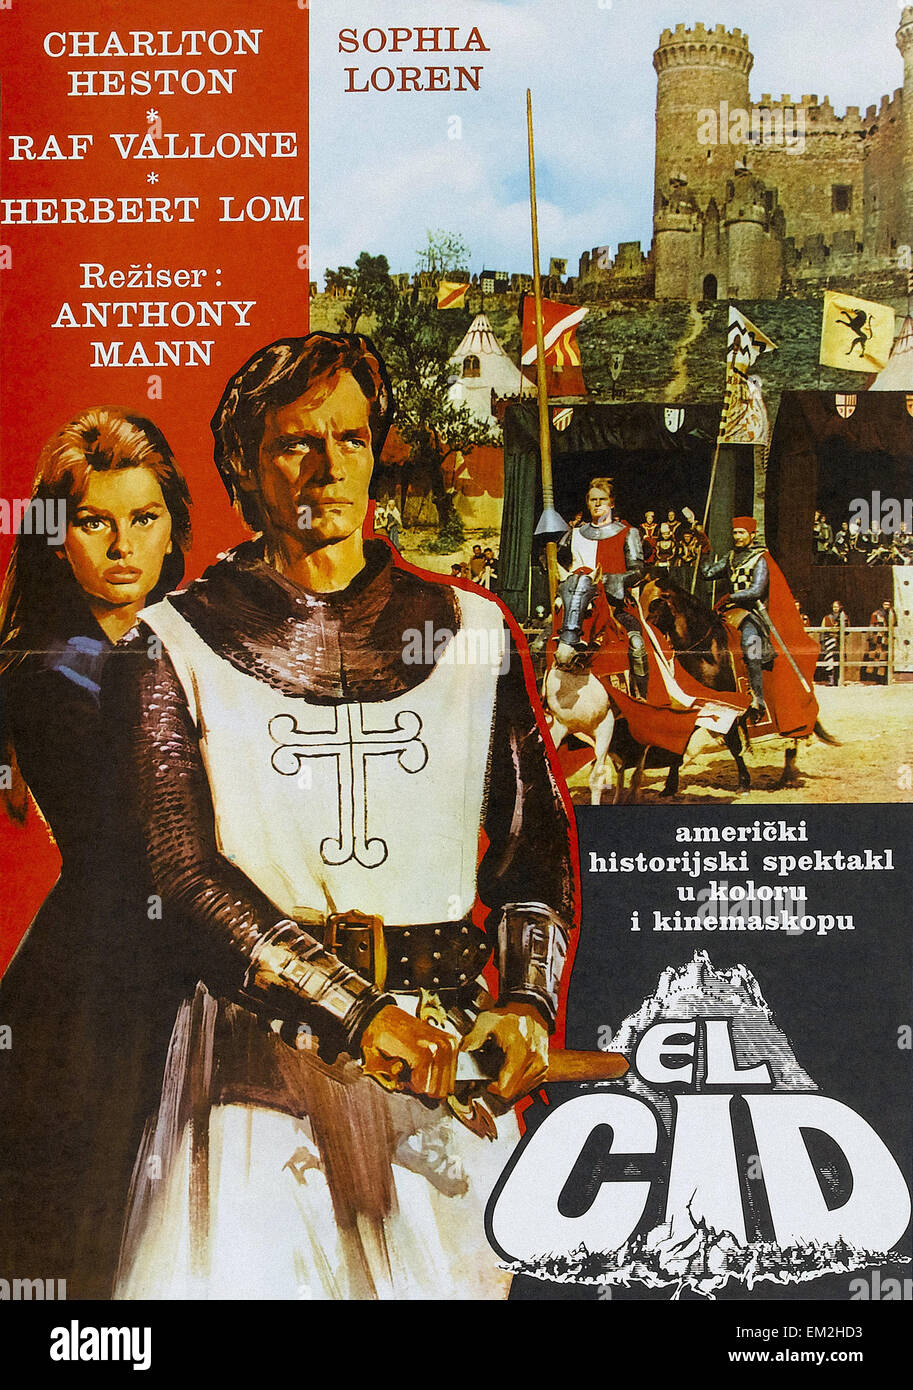 El Cid - poster del filmato Foto stock - Alamy